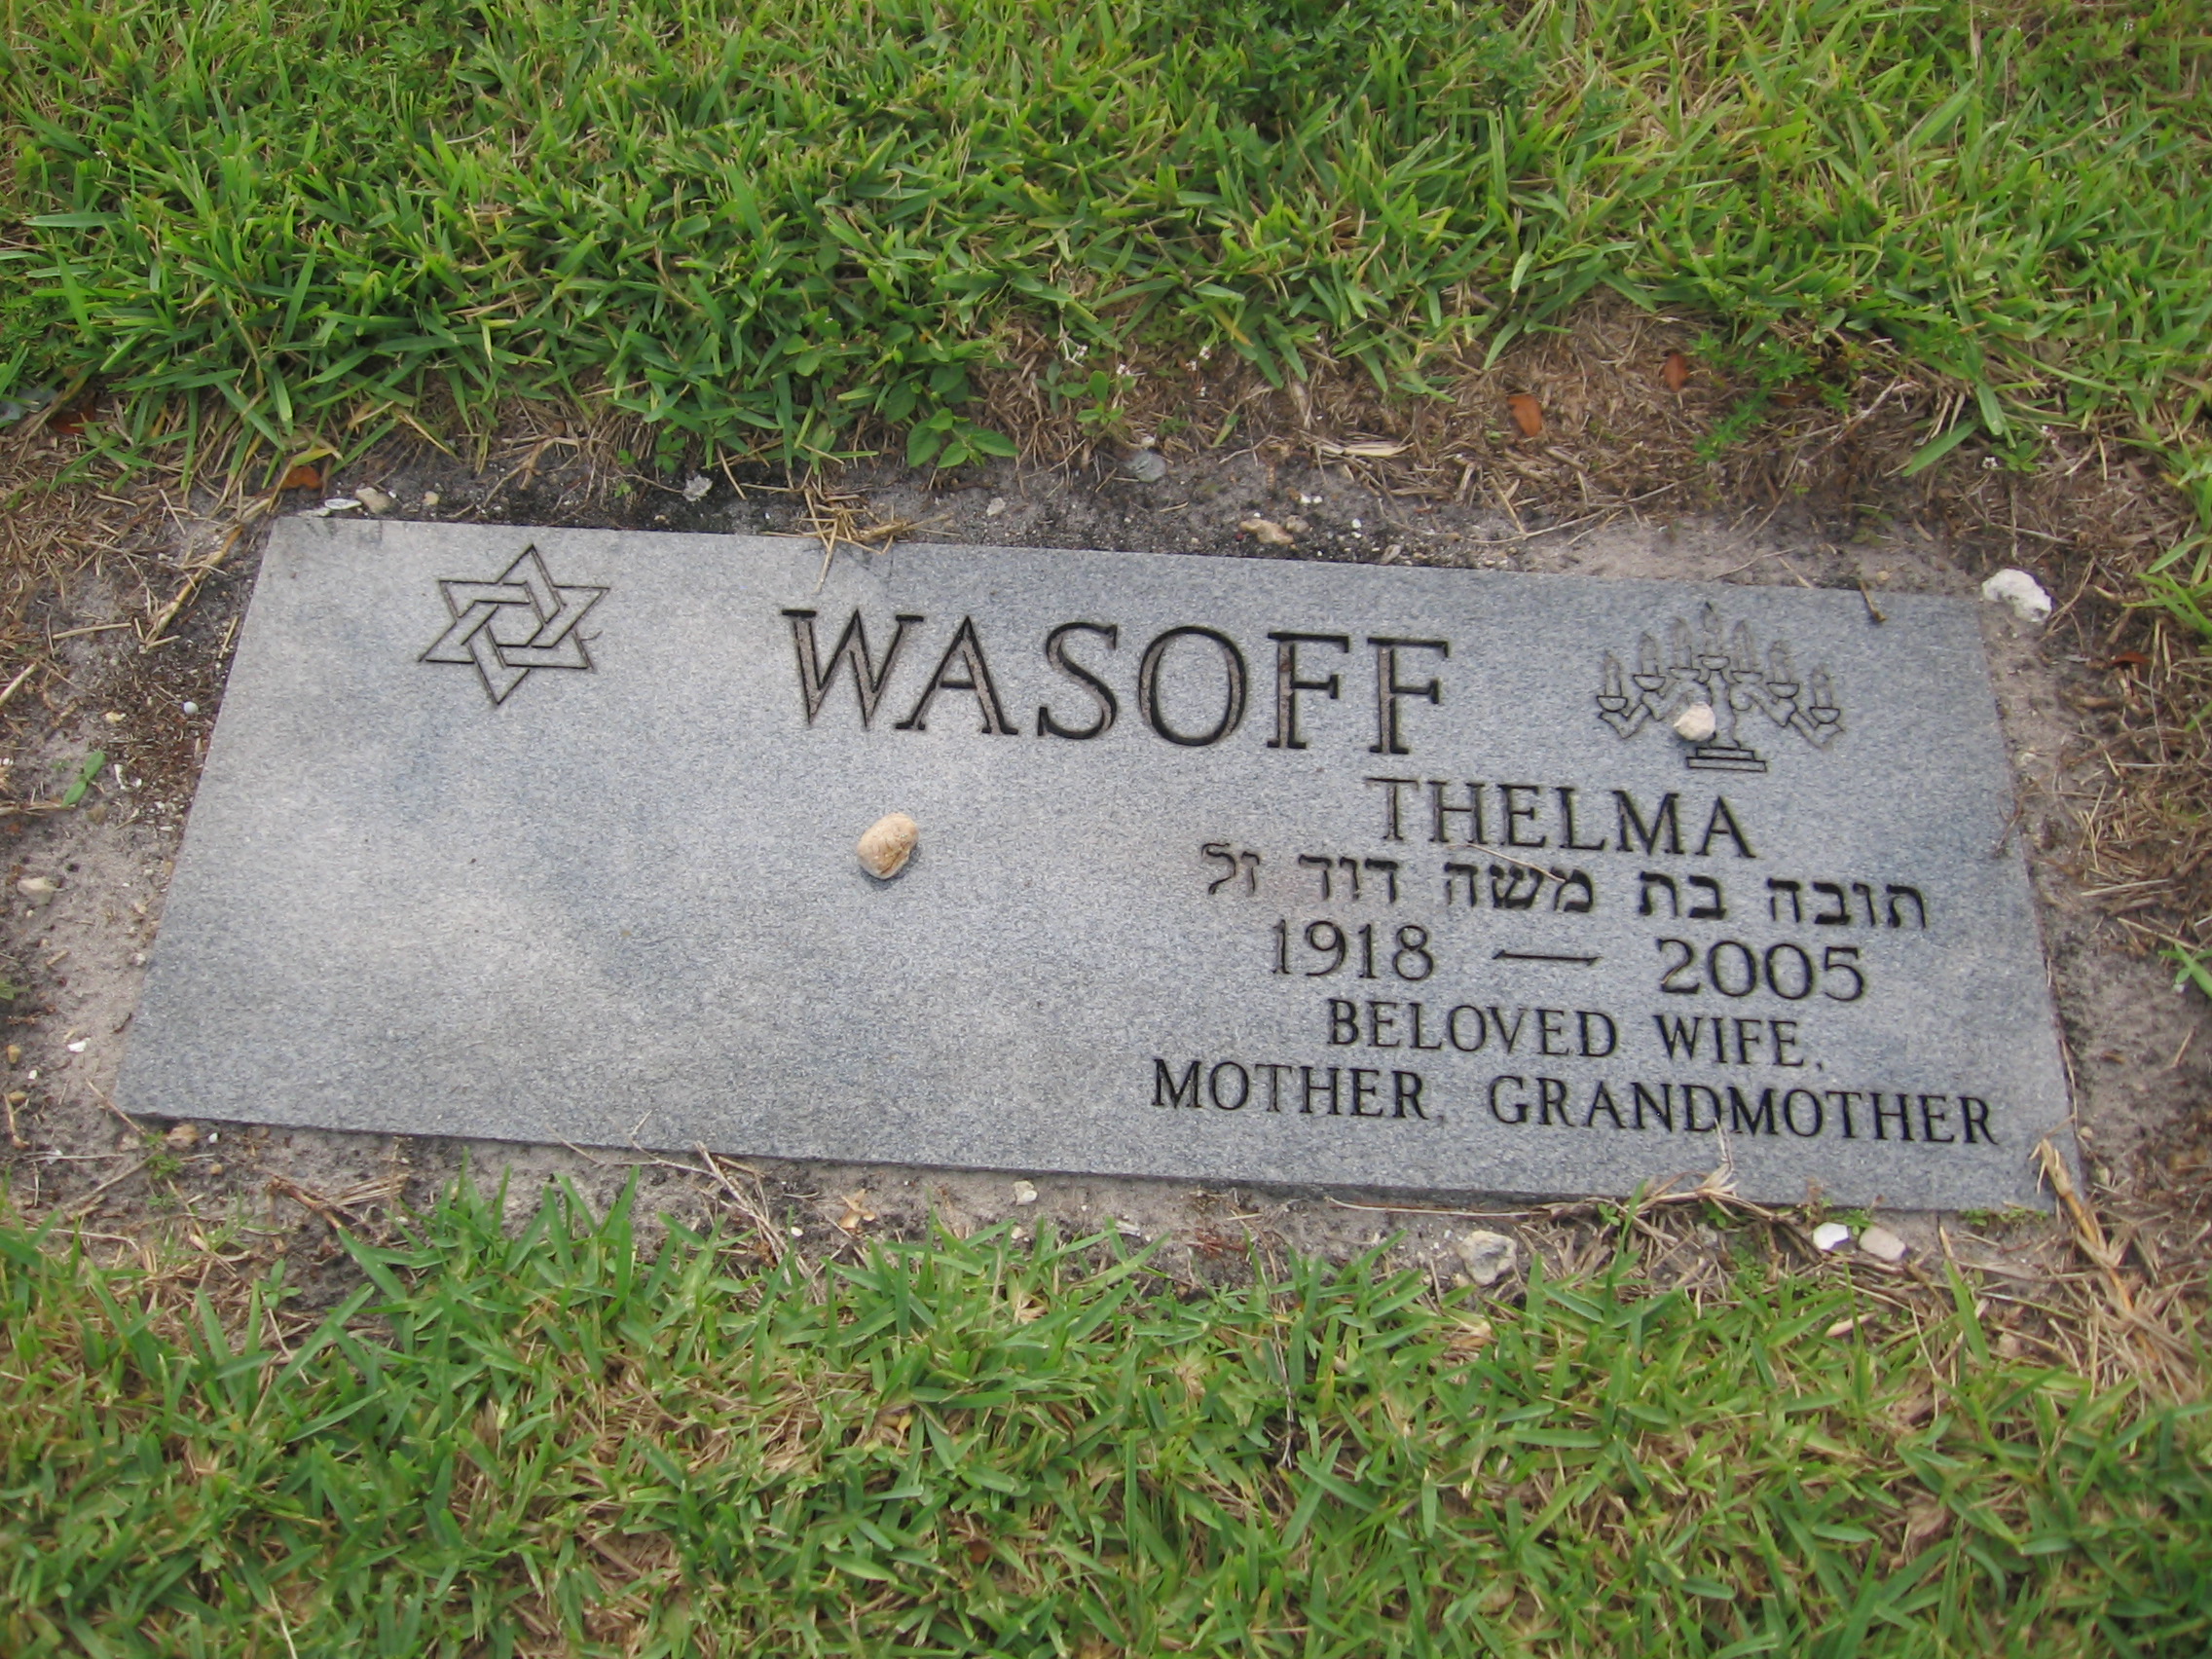 Thelma Wasoff